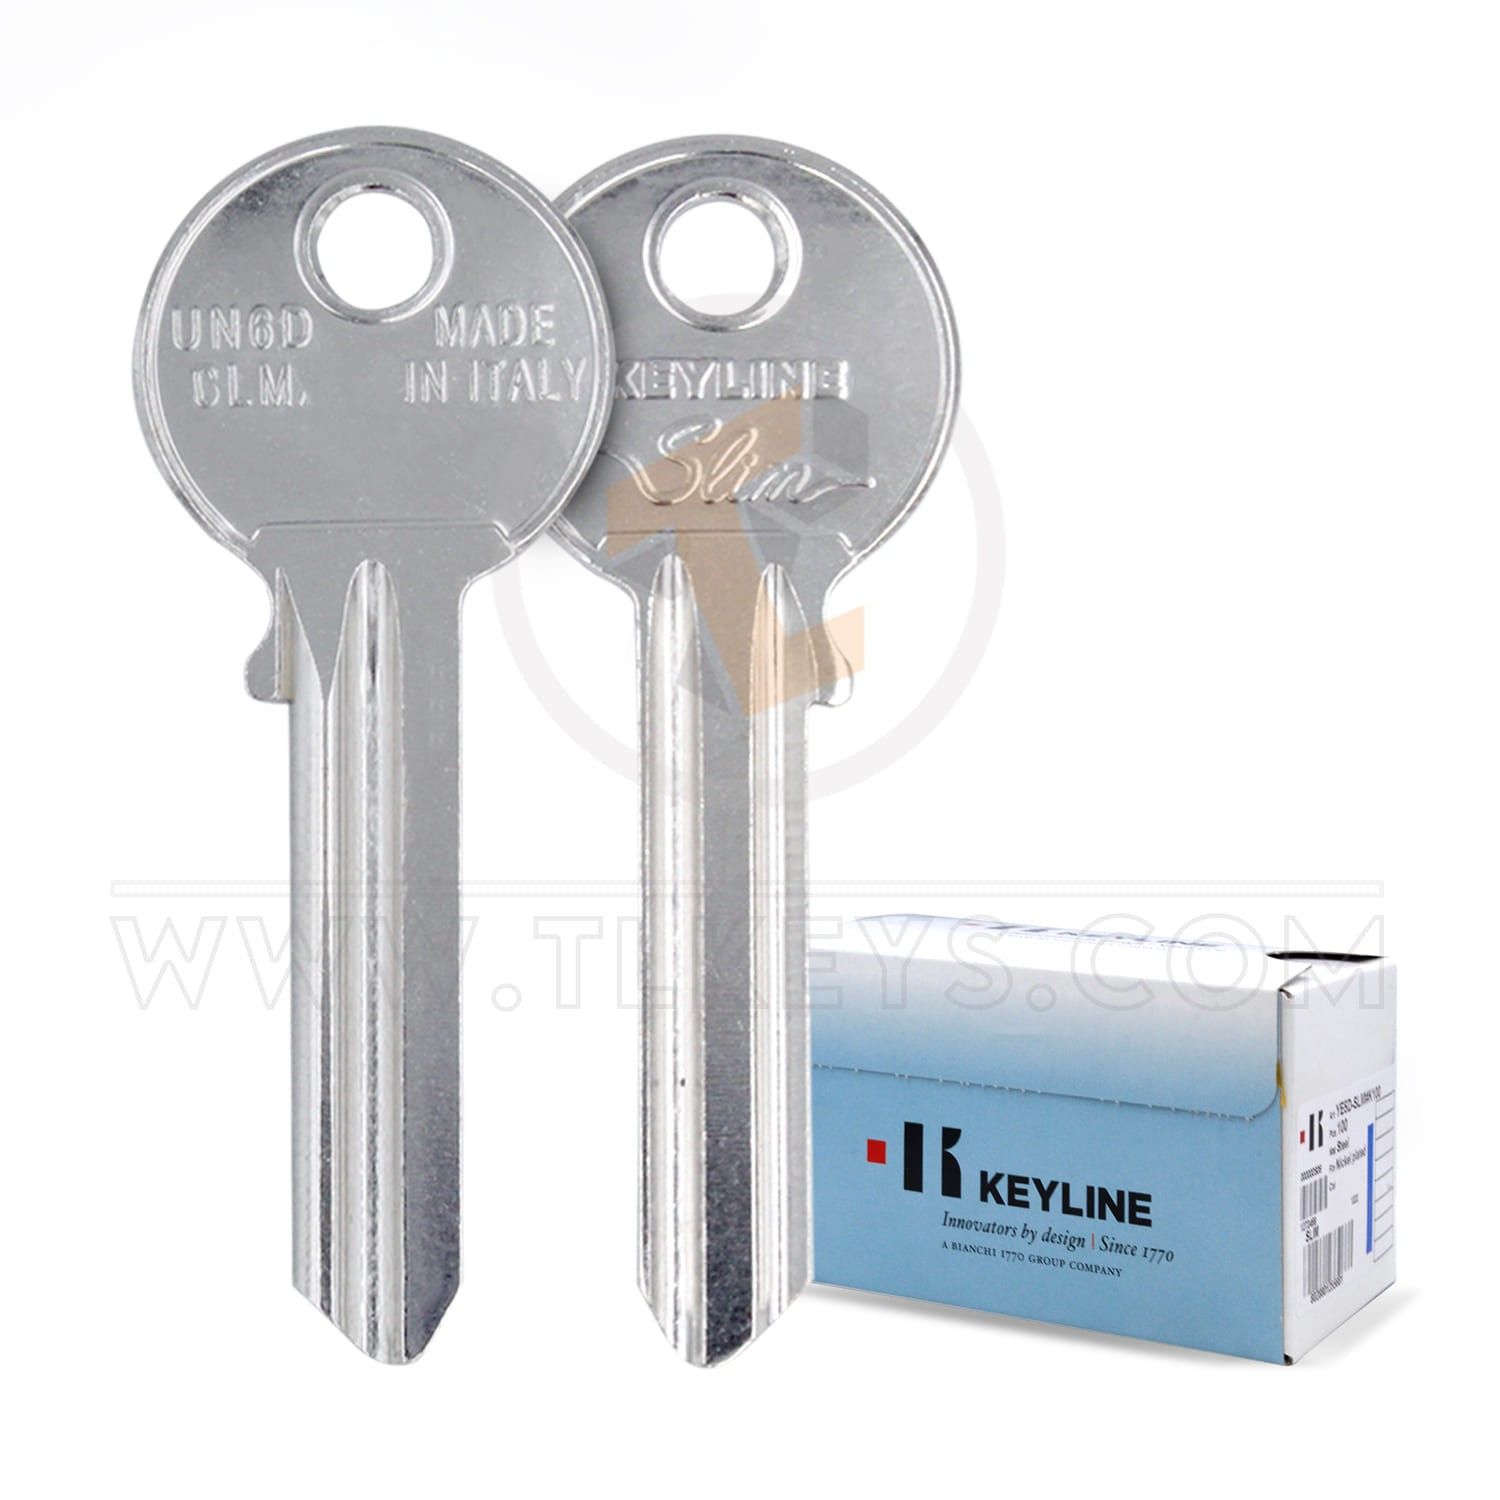 Keyline Door Keys P/N: UN6D SLM Compatible P/N:054 Keys